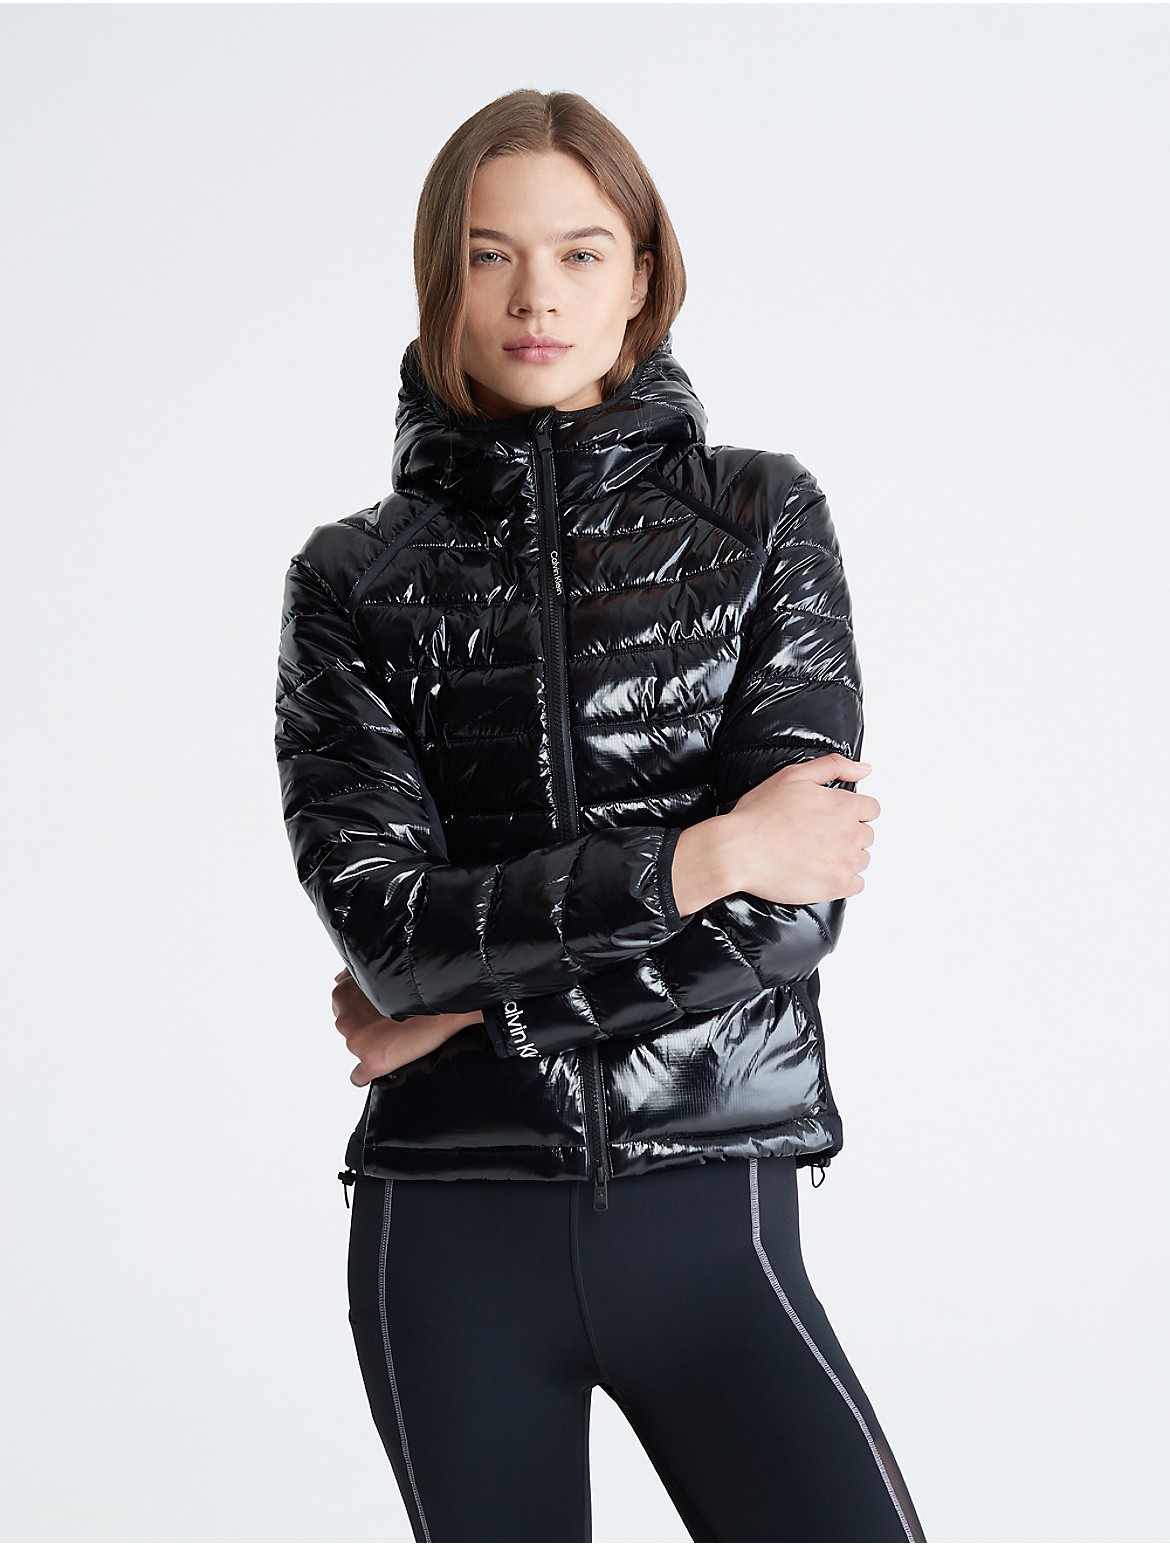 Calvin Klein Women's CK Sport Shiny Puffer Jacket - Black - M